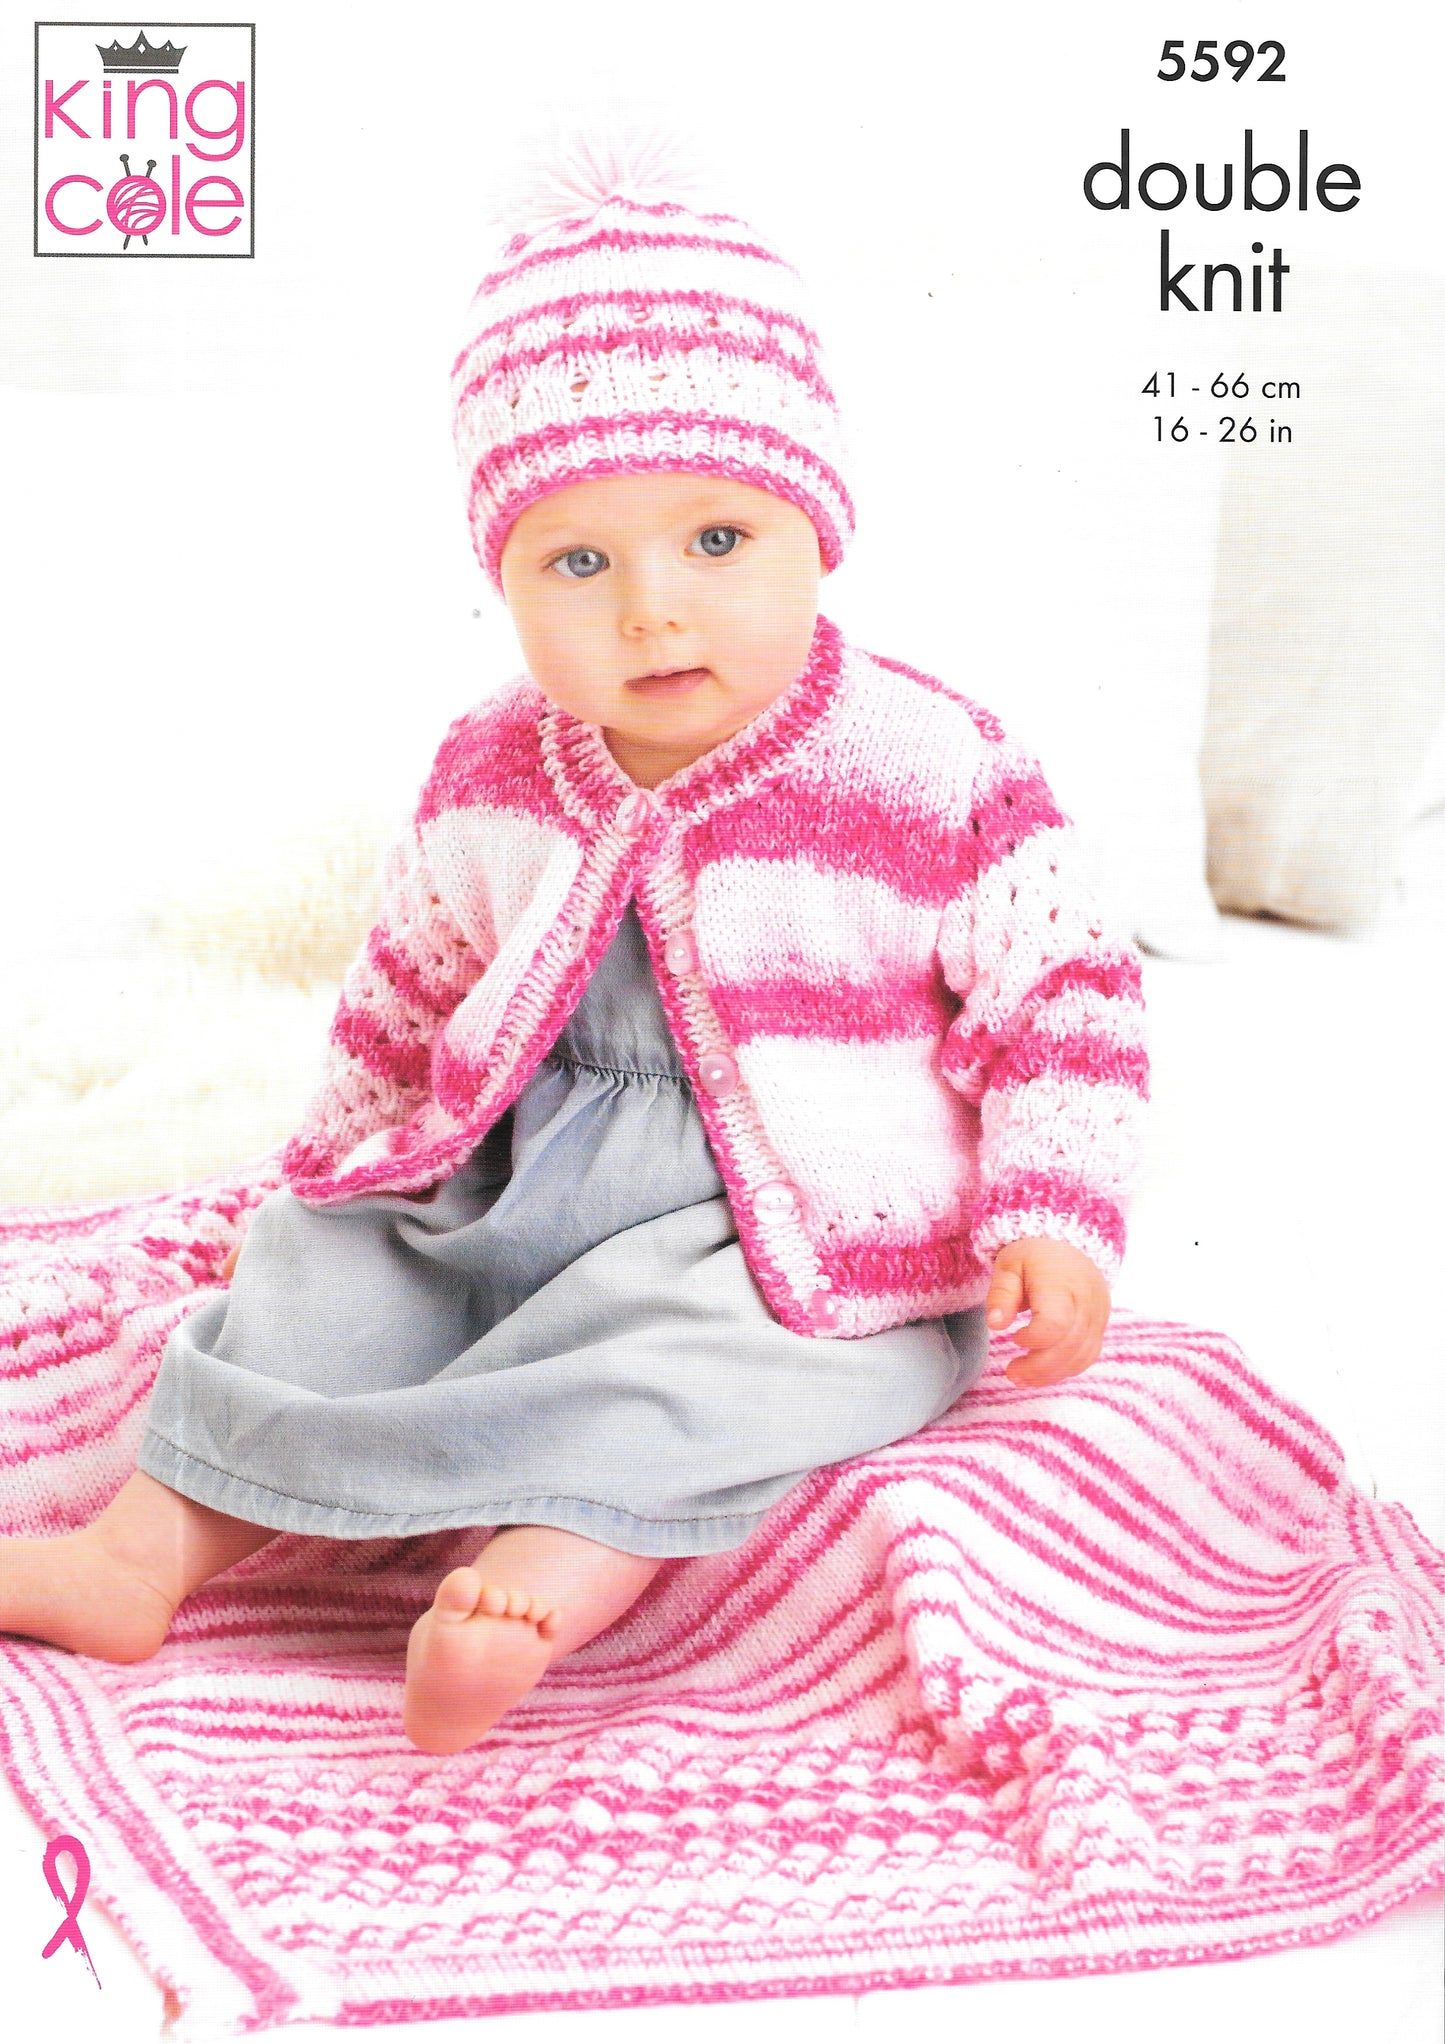 5592 King Cole Double Knit Blanket/Cardigan/Hat knitting pattern